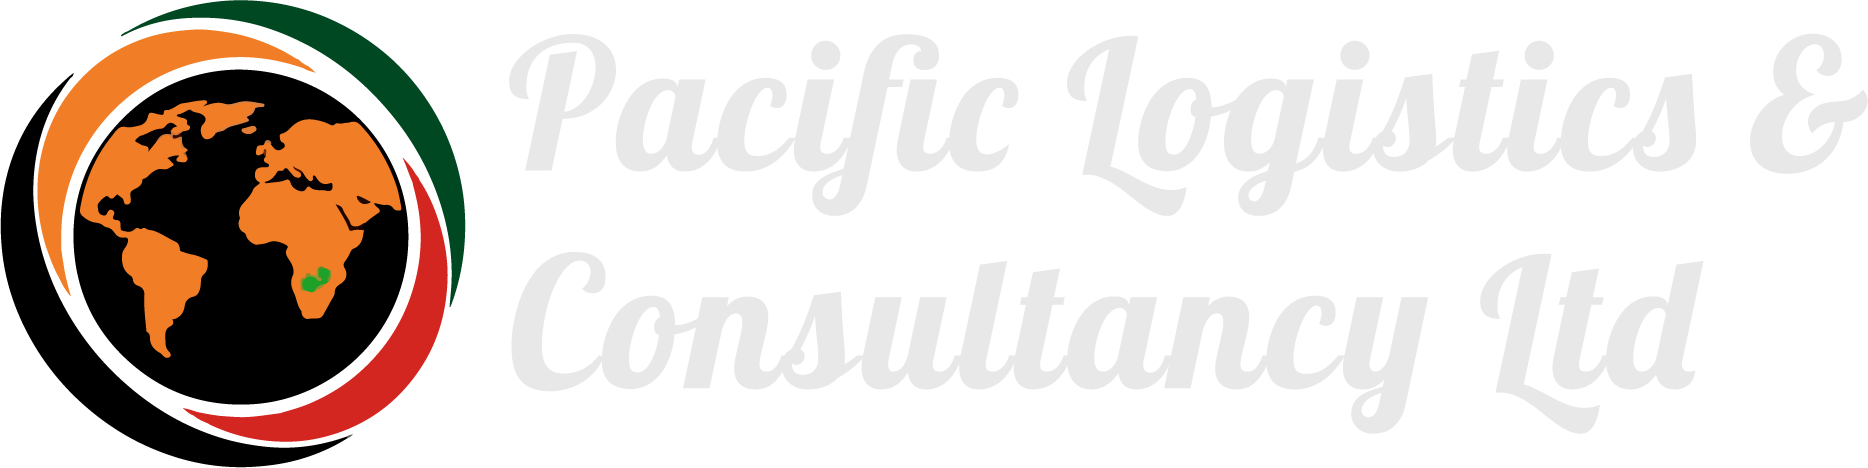 pacific logistics and consultancy ltd logo